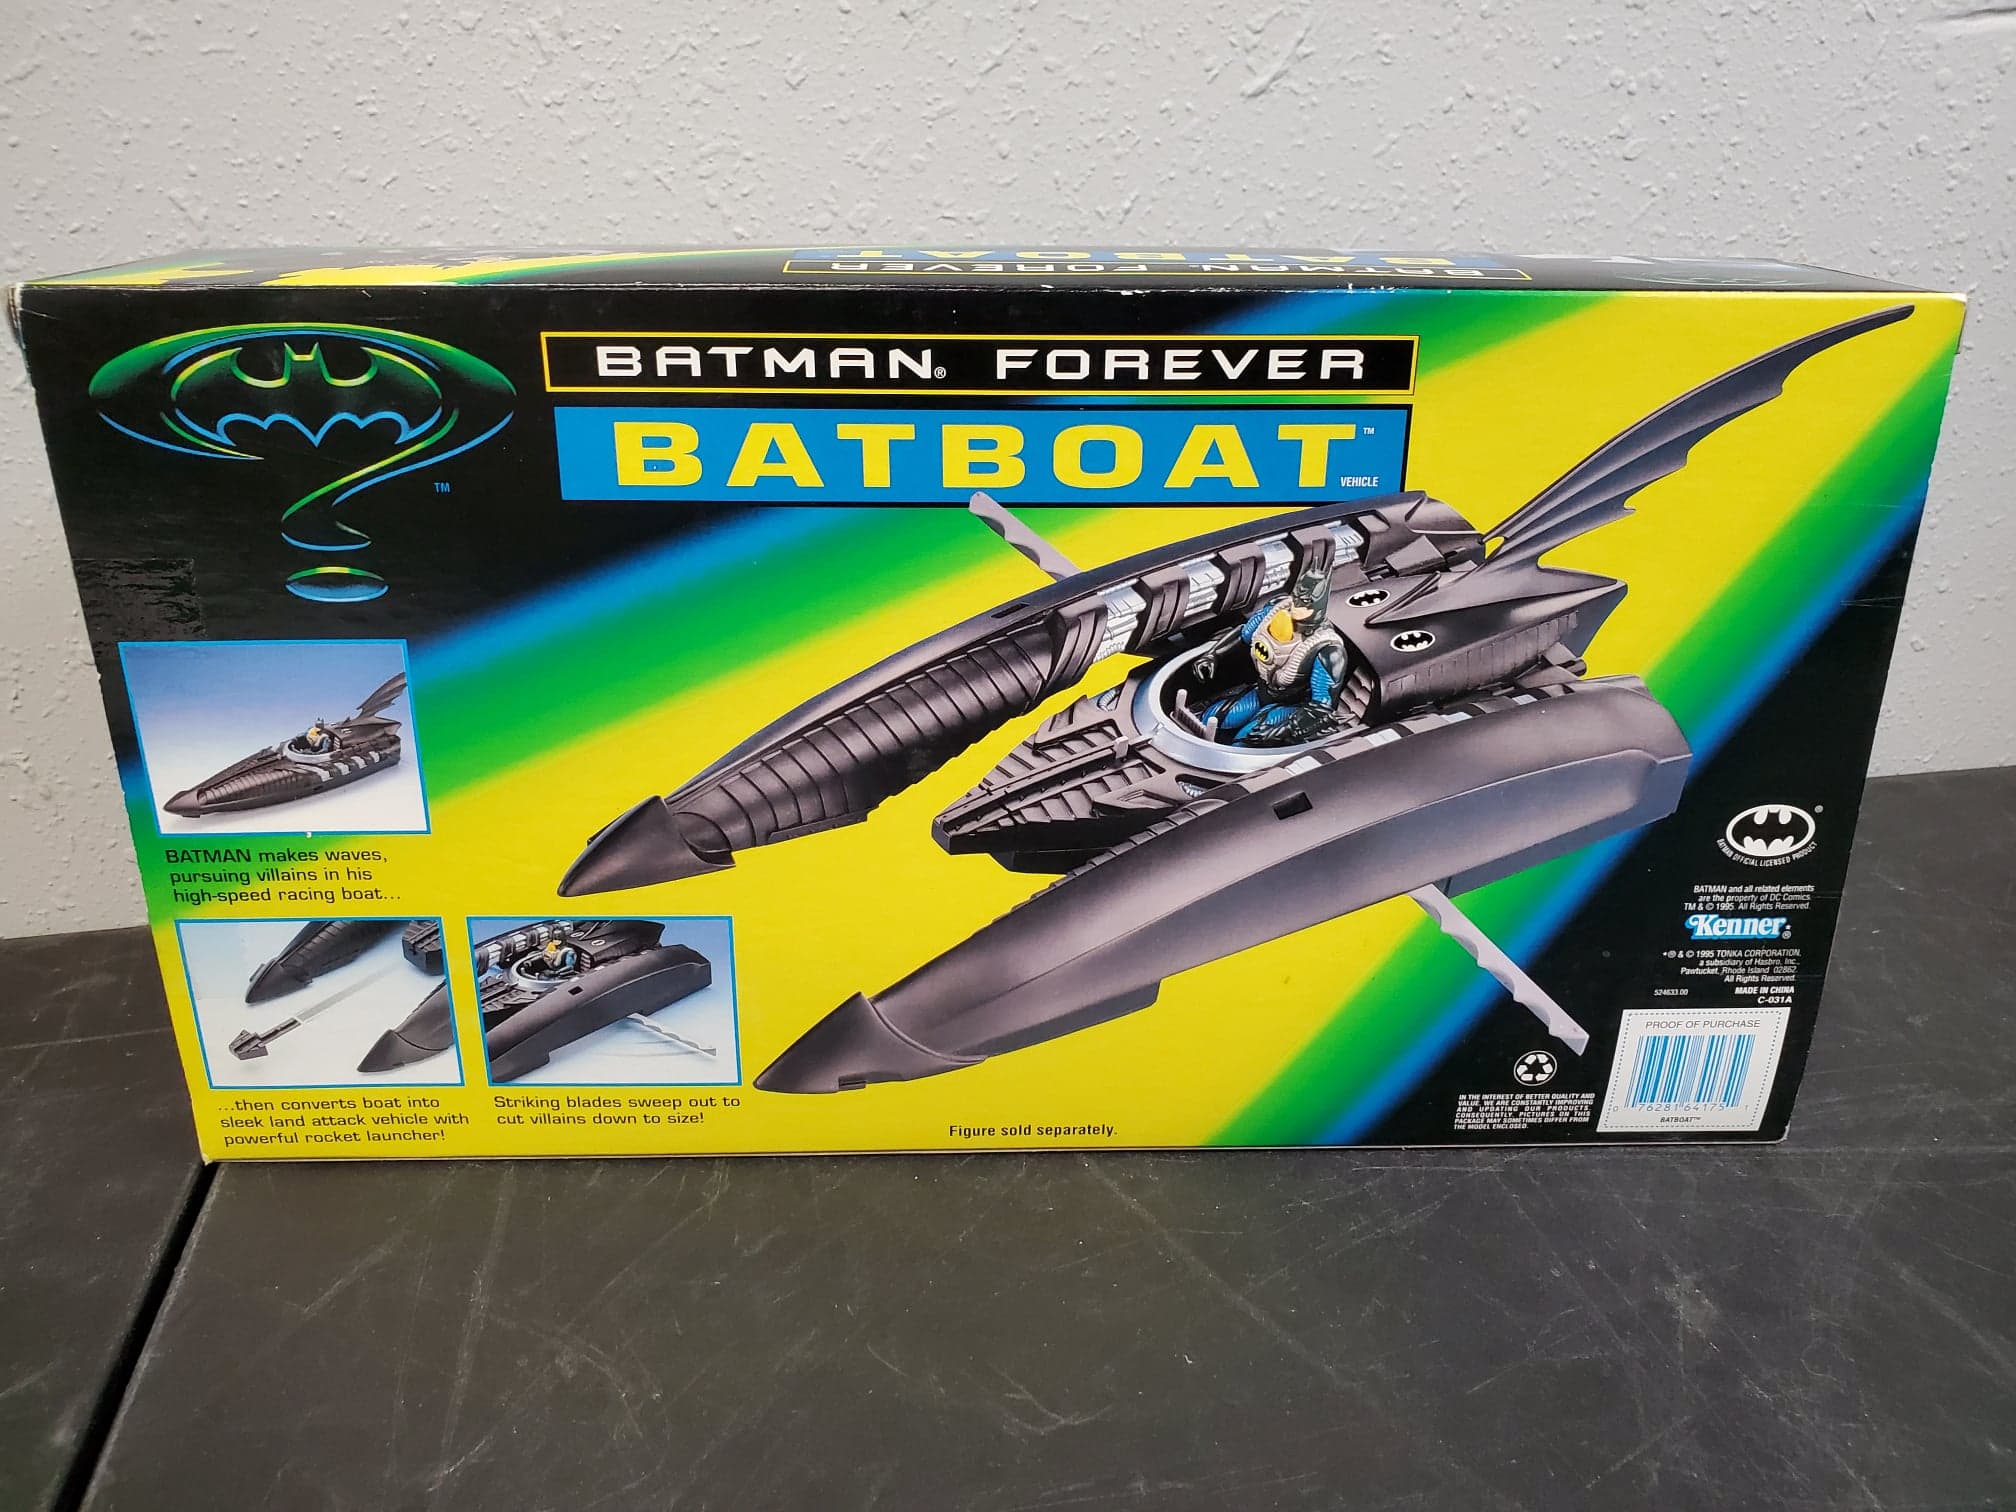 Batman Forever Batboat – Vintage Toy Mall